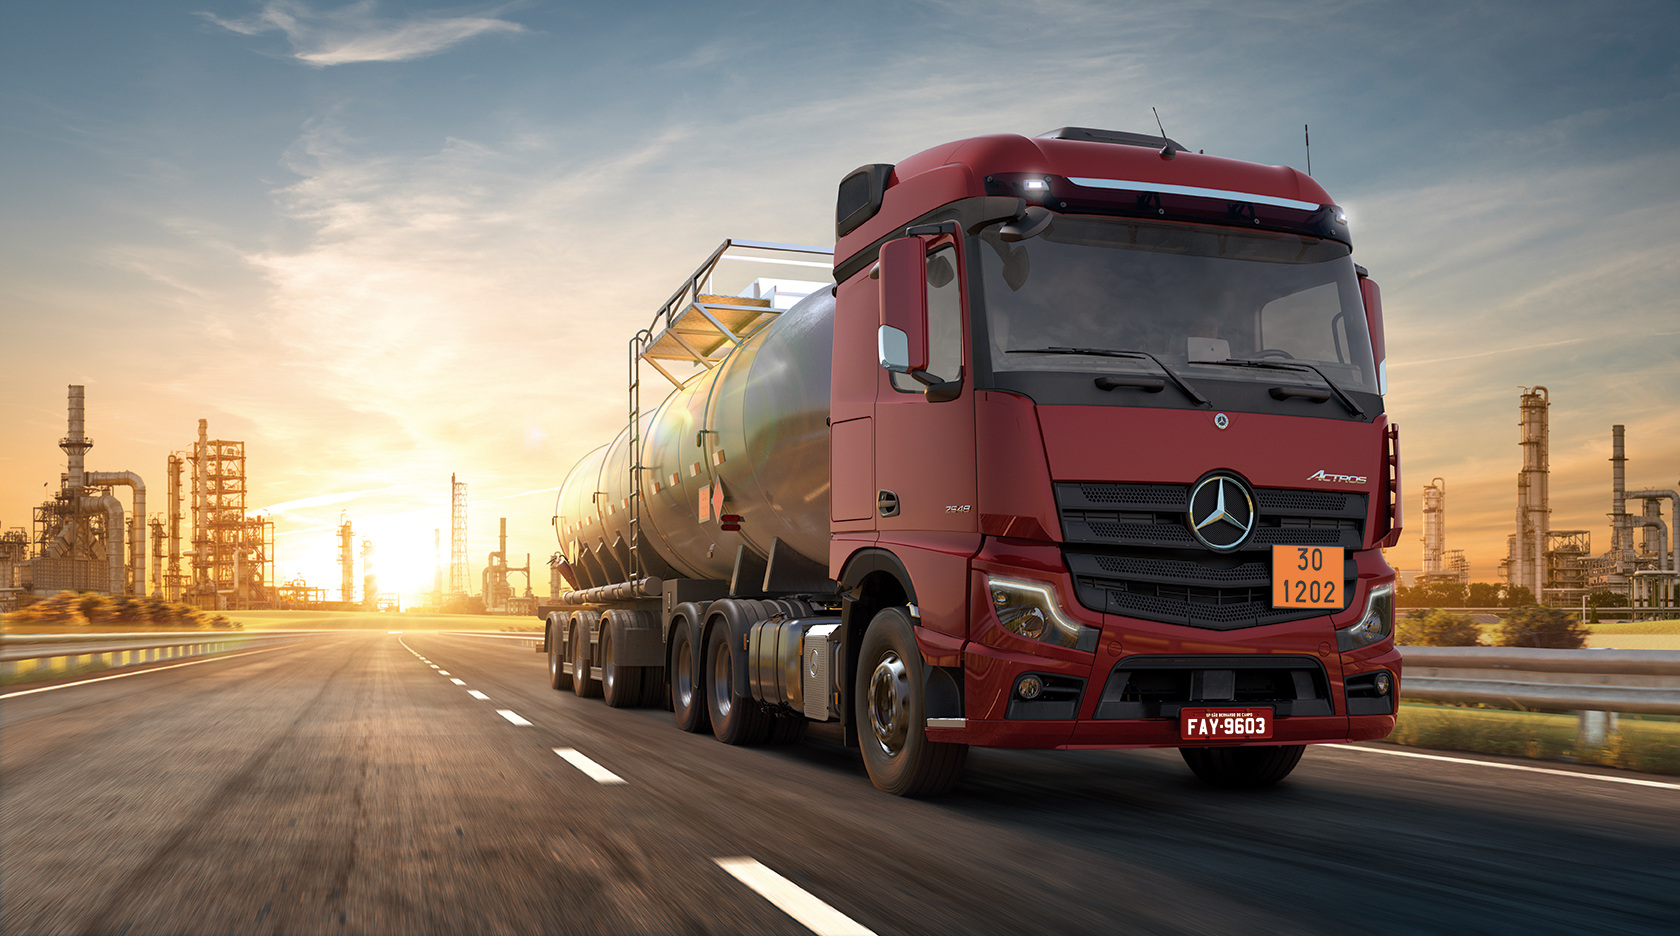 Daimler Truck Financial Services starts rental business in Brazil